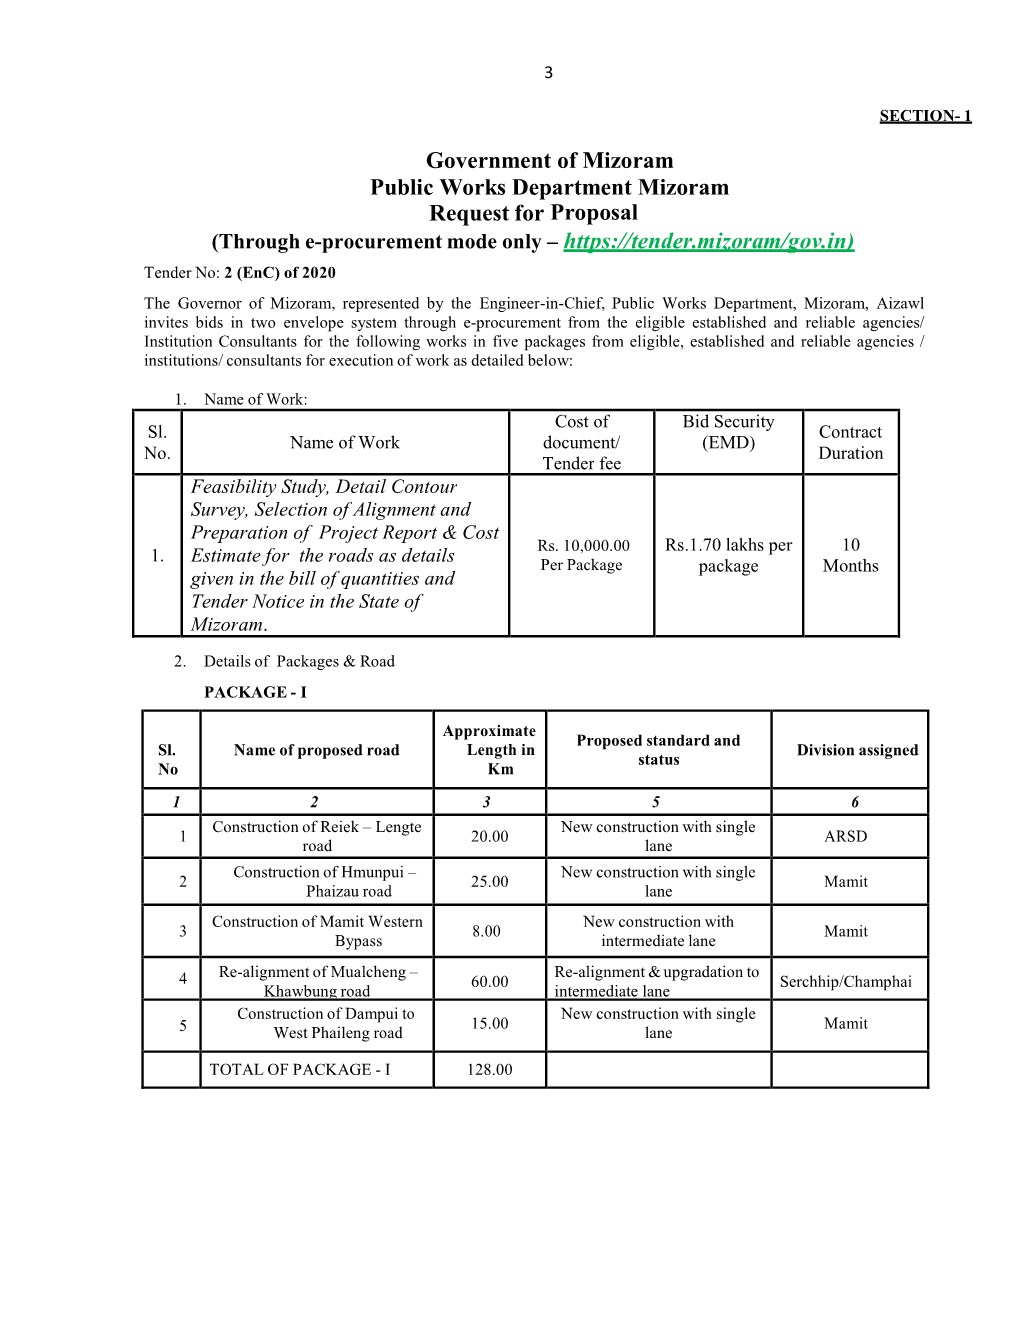 Government of Mizoram Public Works Department Mizoram Request for Proposal (Through E-Procurement Mode Only –